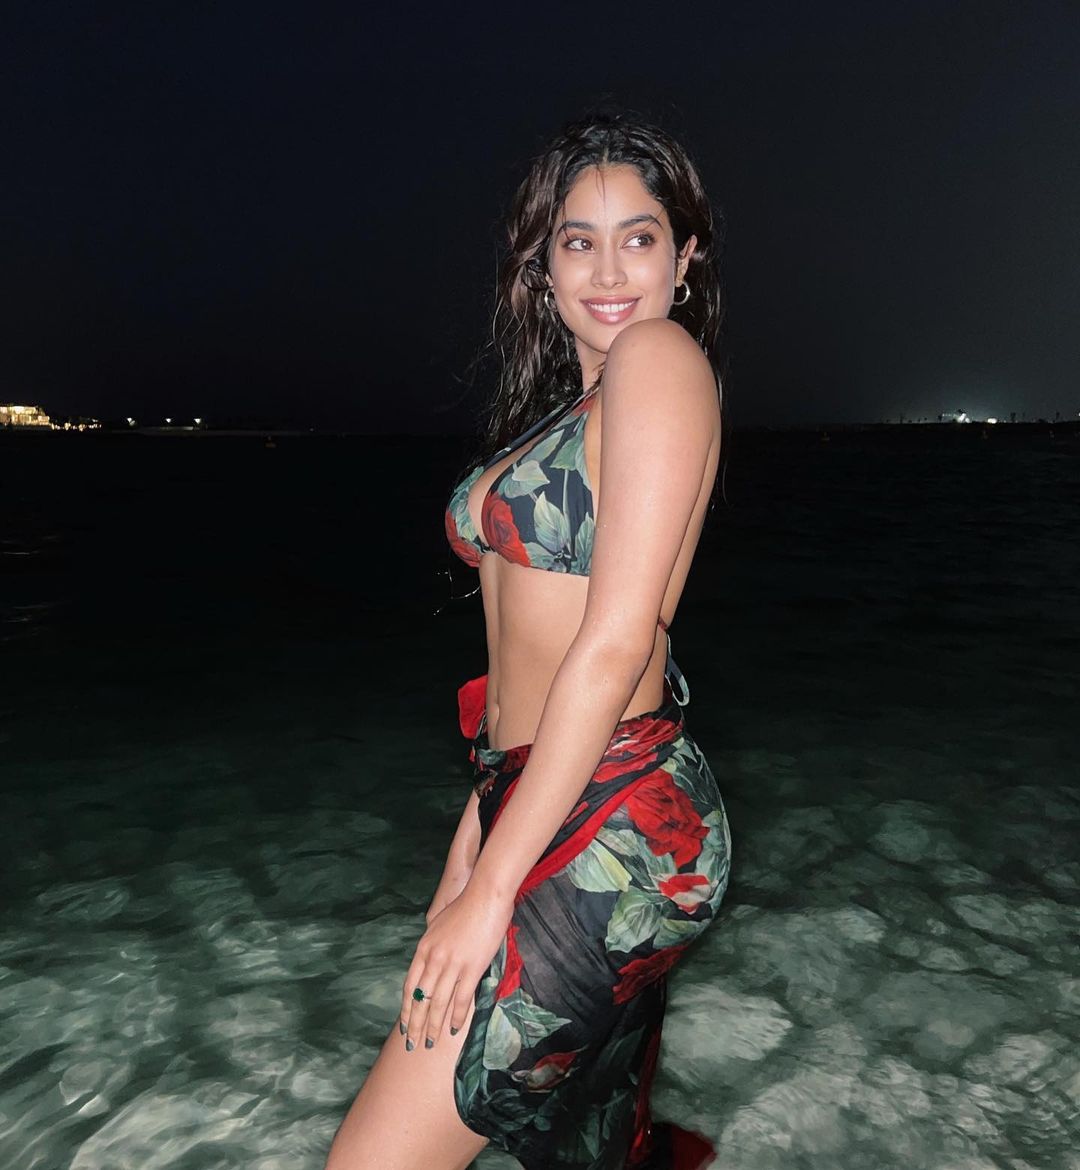 Janhvi Kapoor looks sizzling in the printed bikini and matching sarong